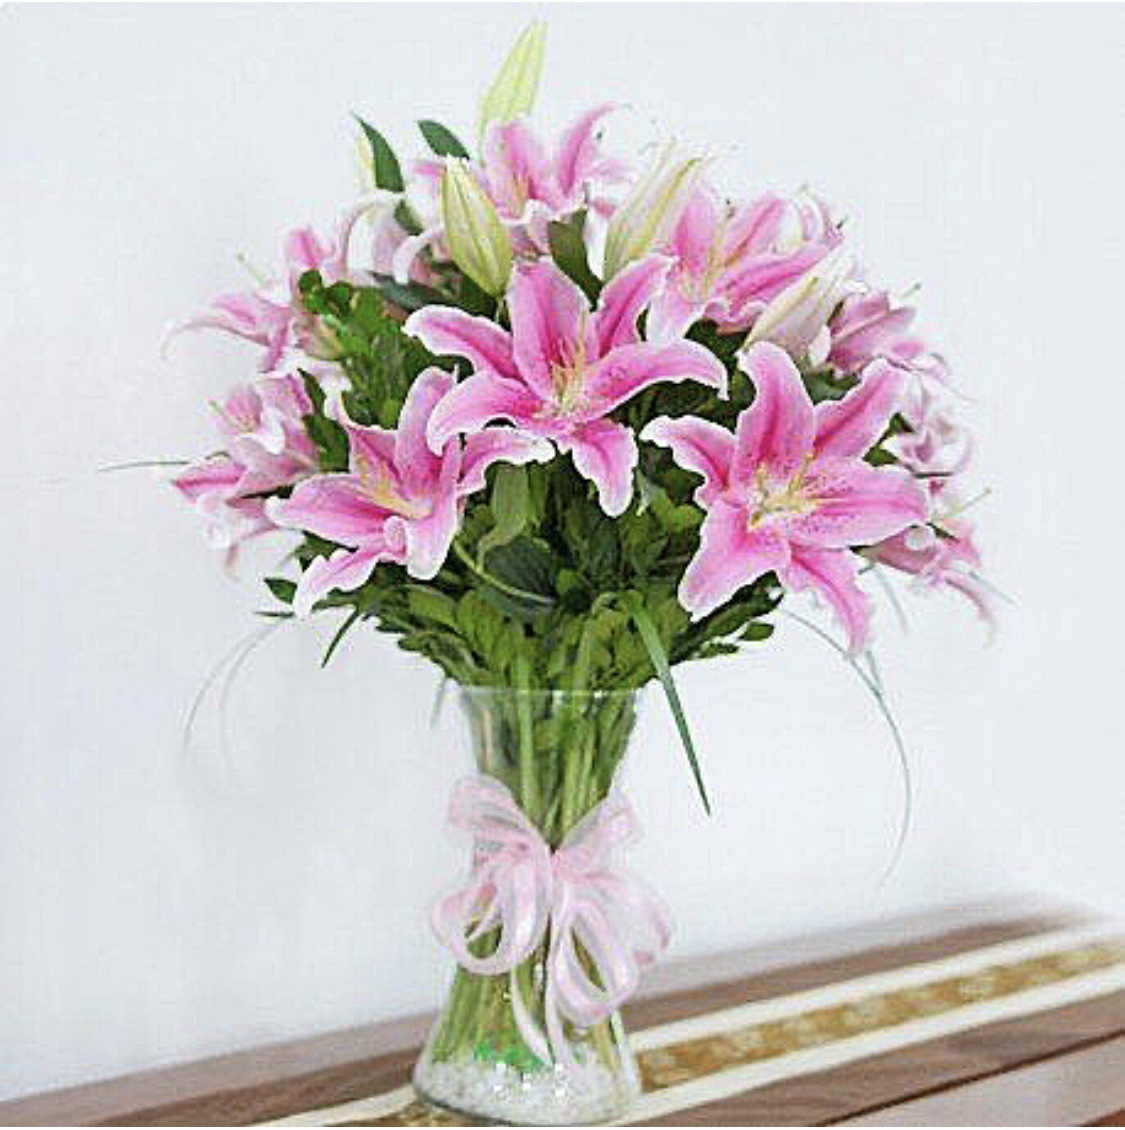 Crini roz in vaza: Vase flowers